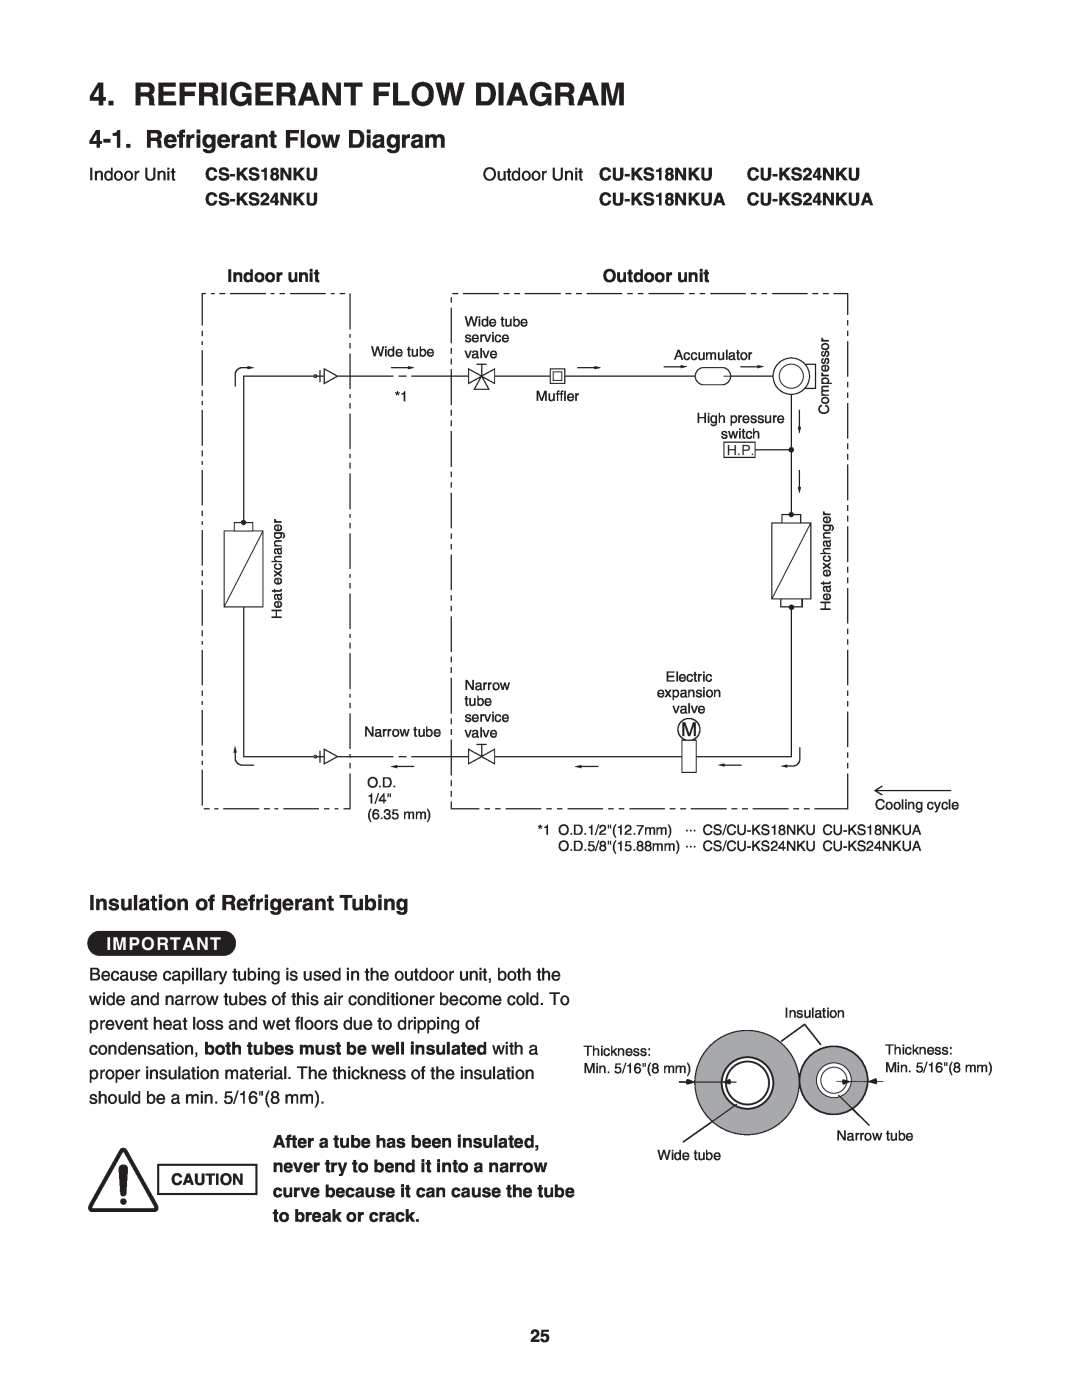 Panasonic CS-KS24NKU, CU-KS24NKUA service manual Refrigerant Flow Diagram, Insulation of Refrigerant Tubing 